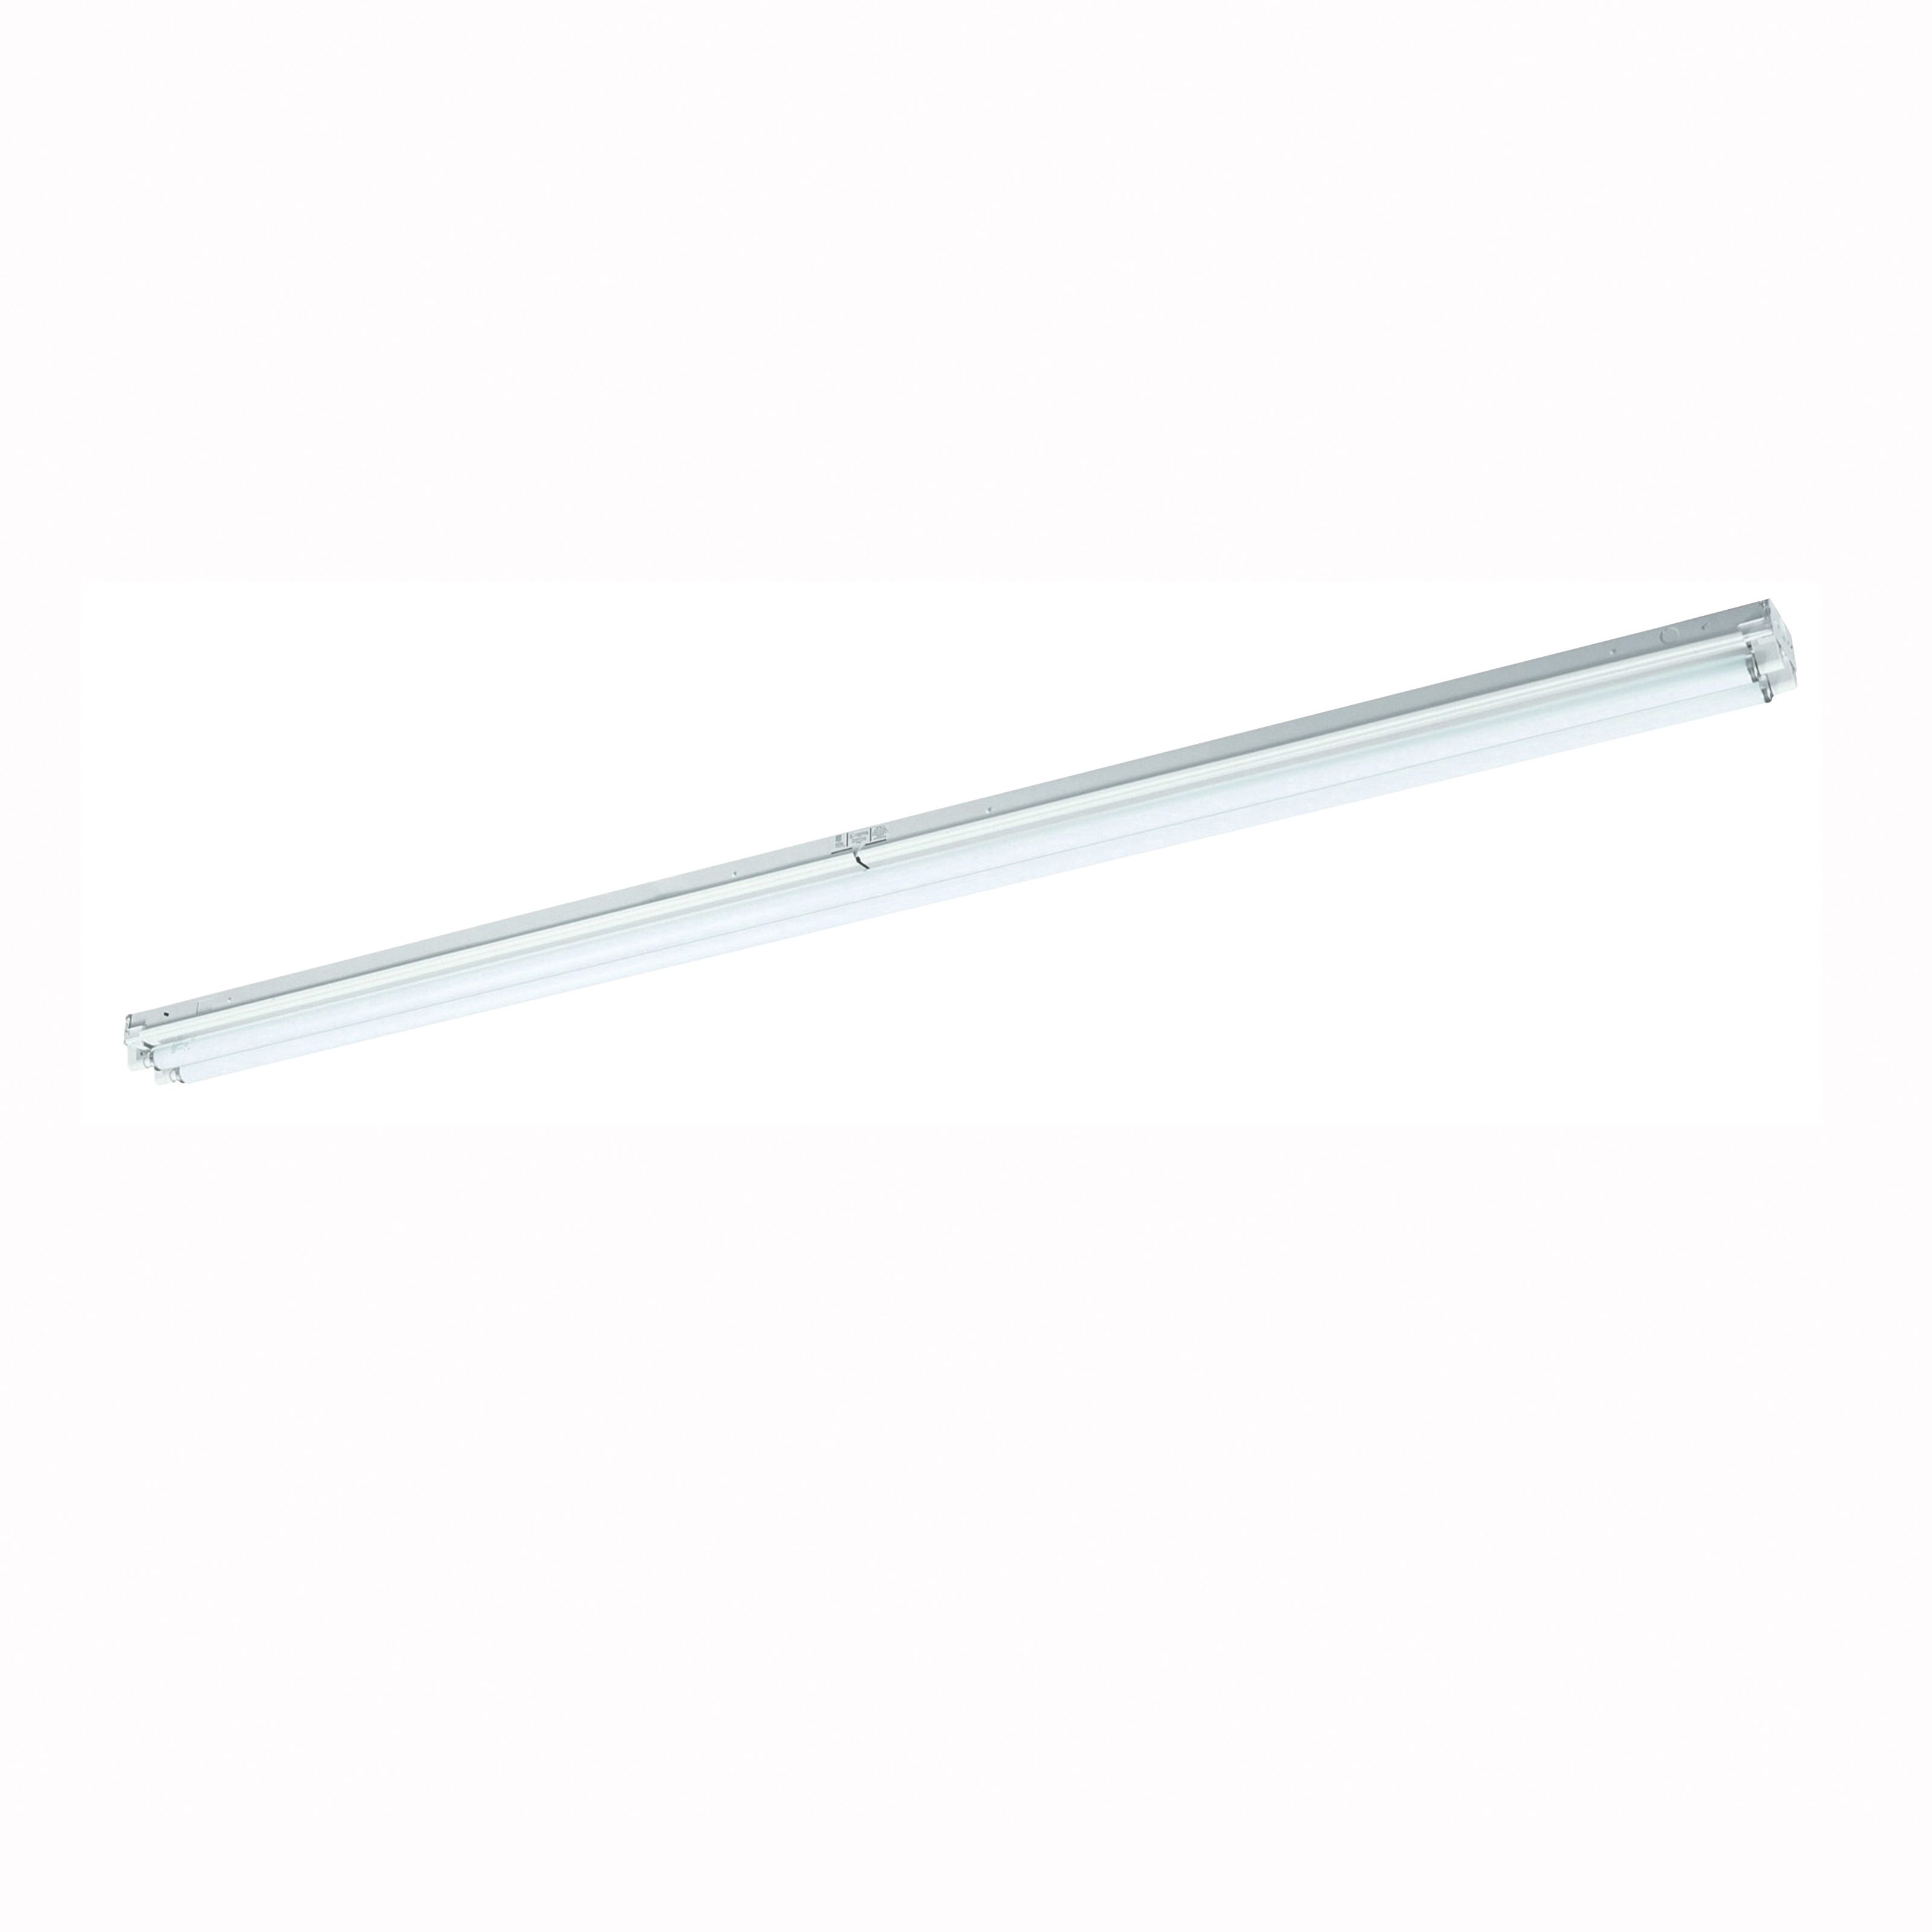 LITHONIA LIGHTING 199YWJ Strip Light Fixture, 120/277 V, 2-Lamp, White Fixture, Gloss Fixture - 1